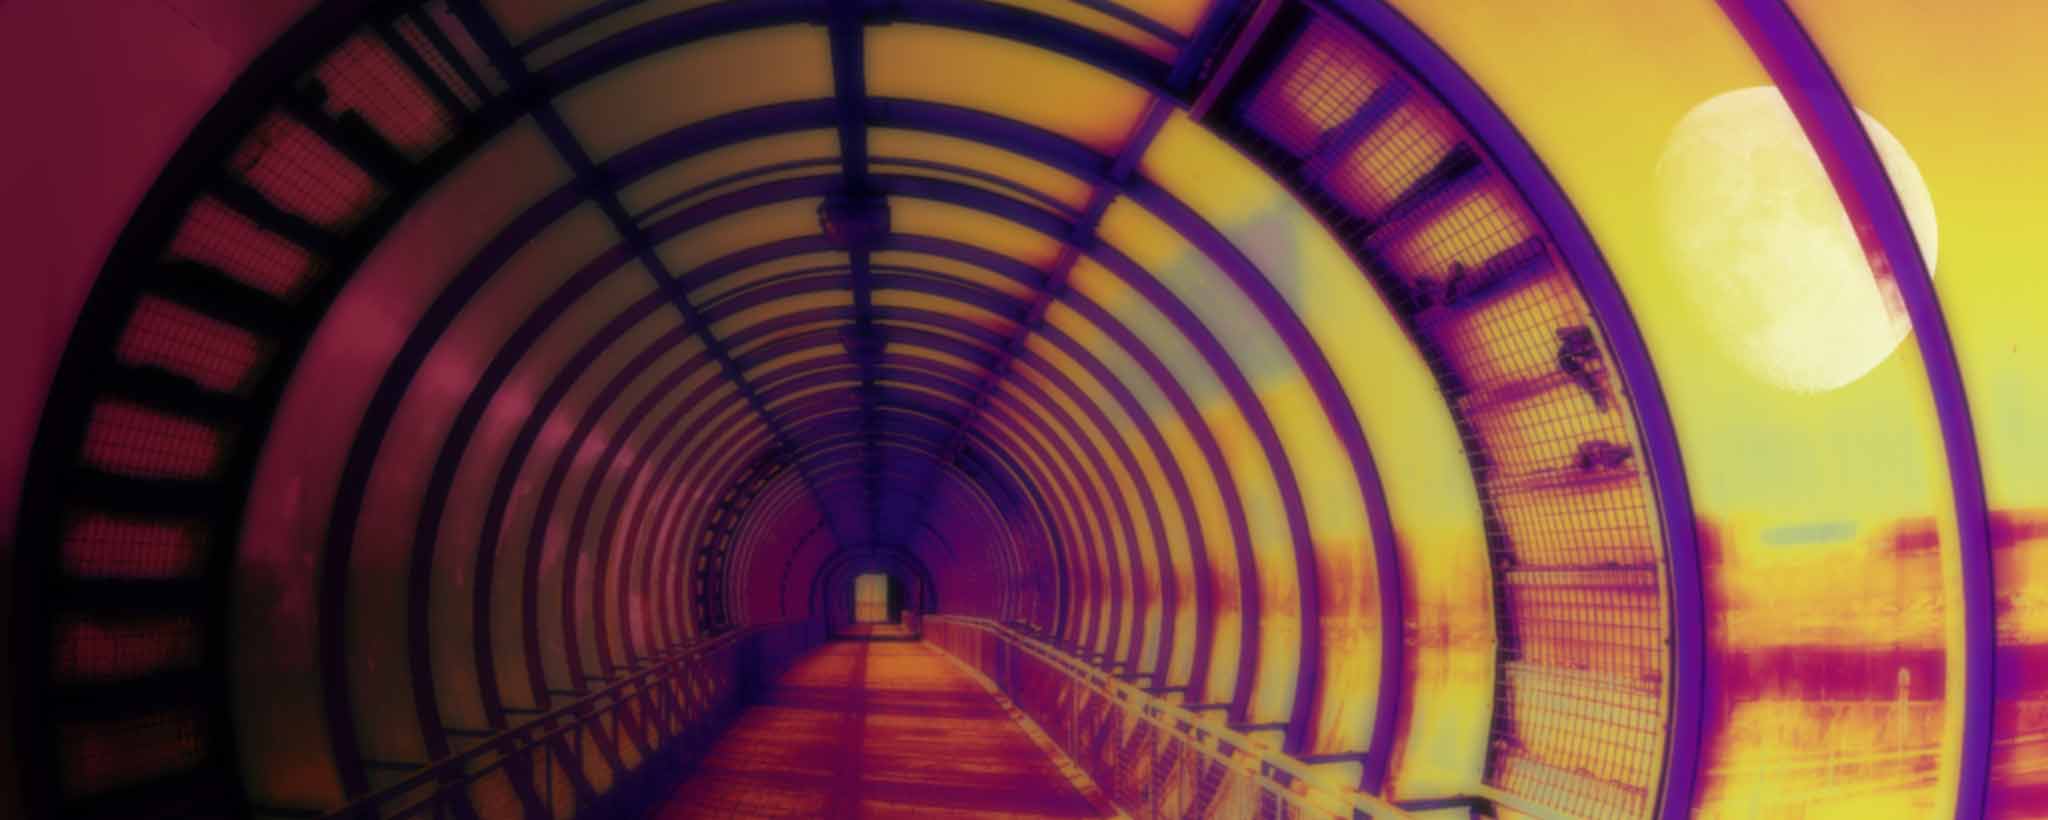 'Tunneling bridge'